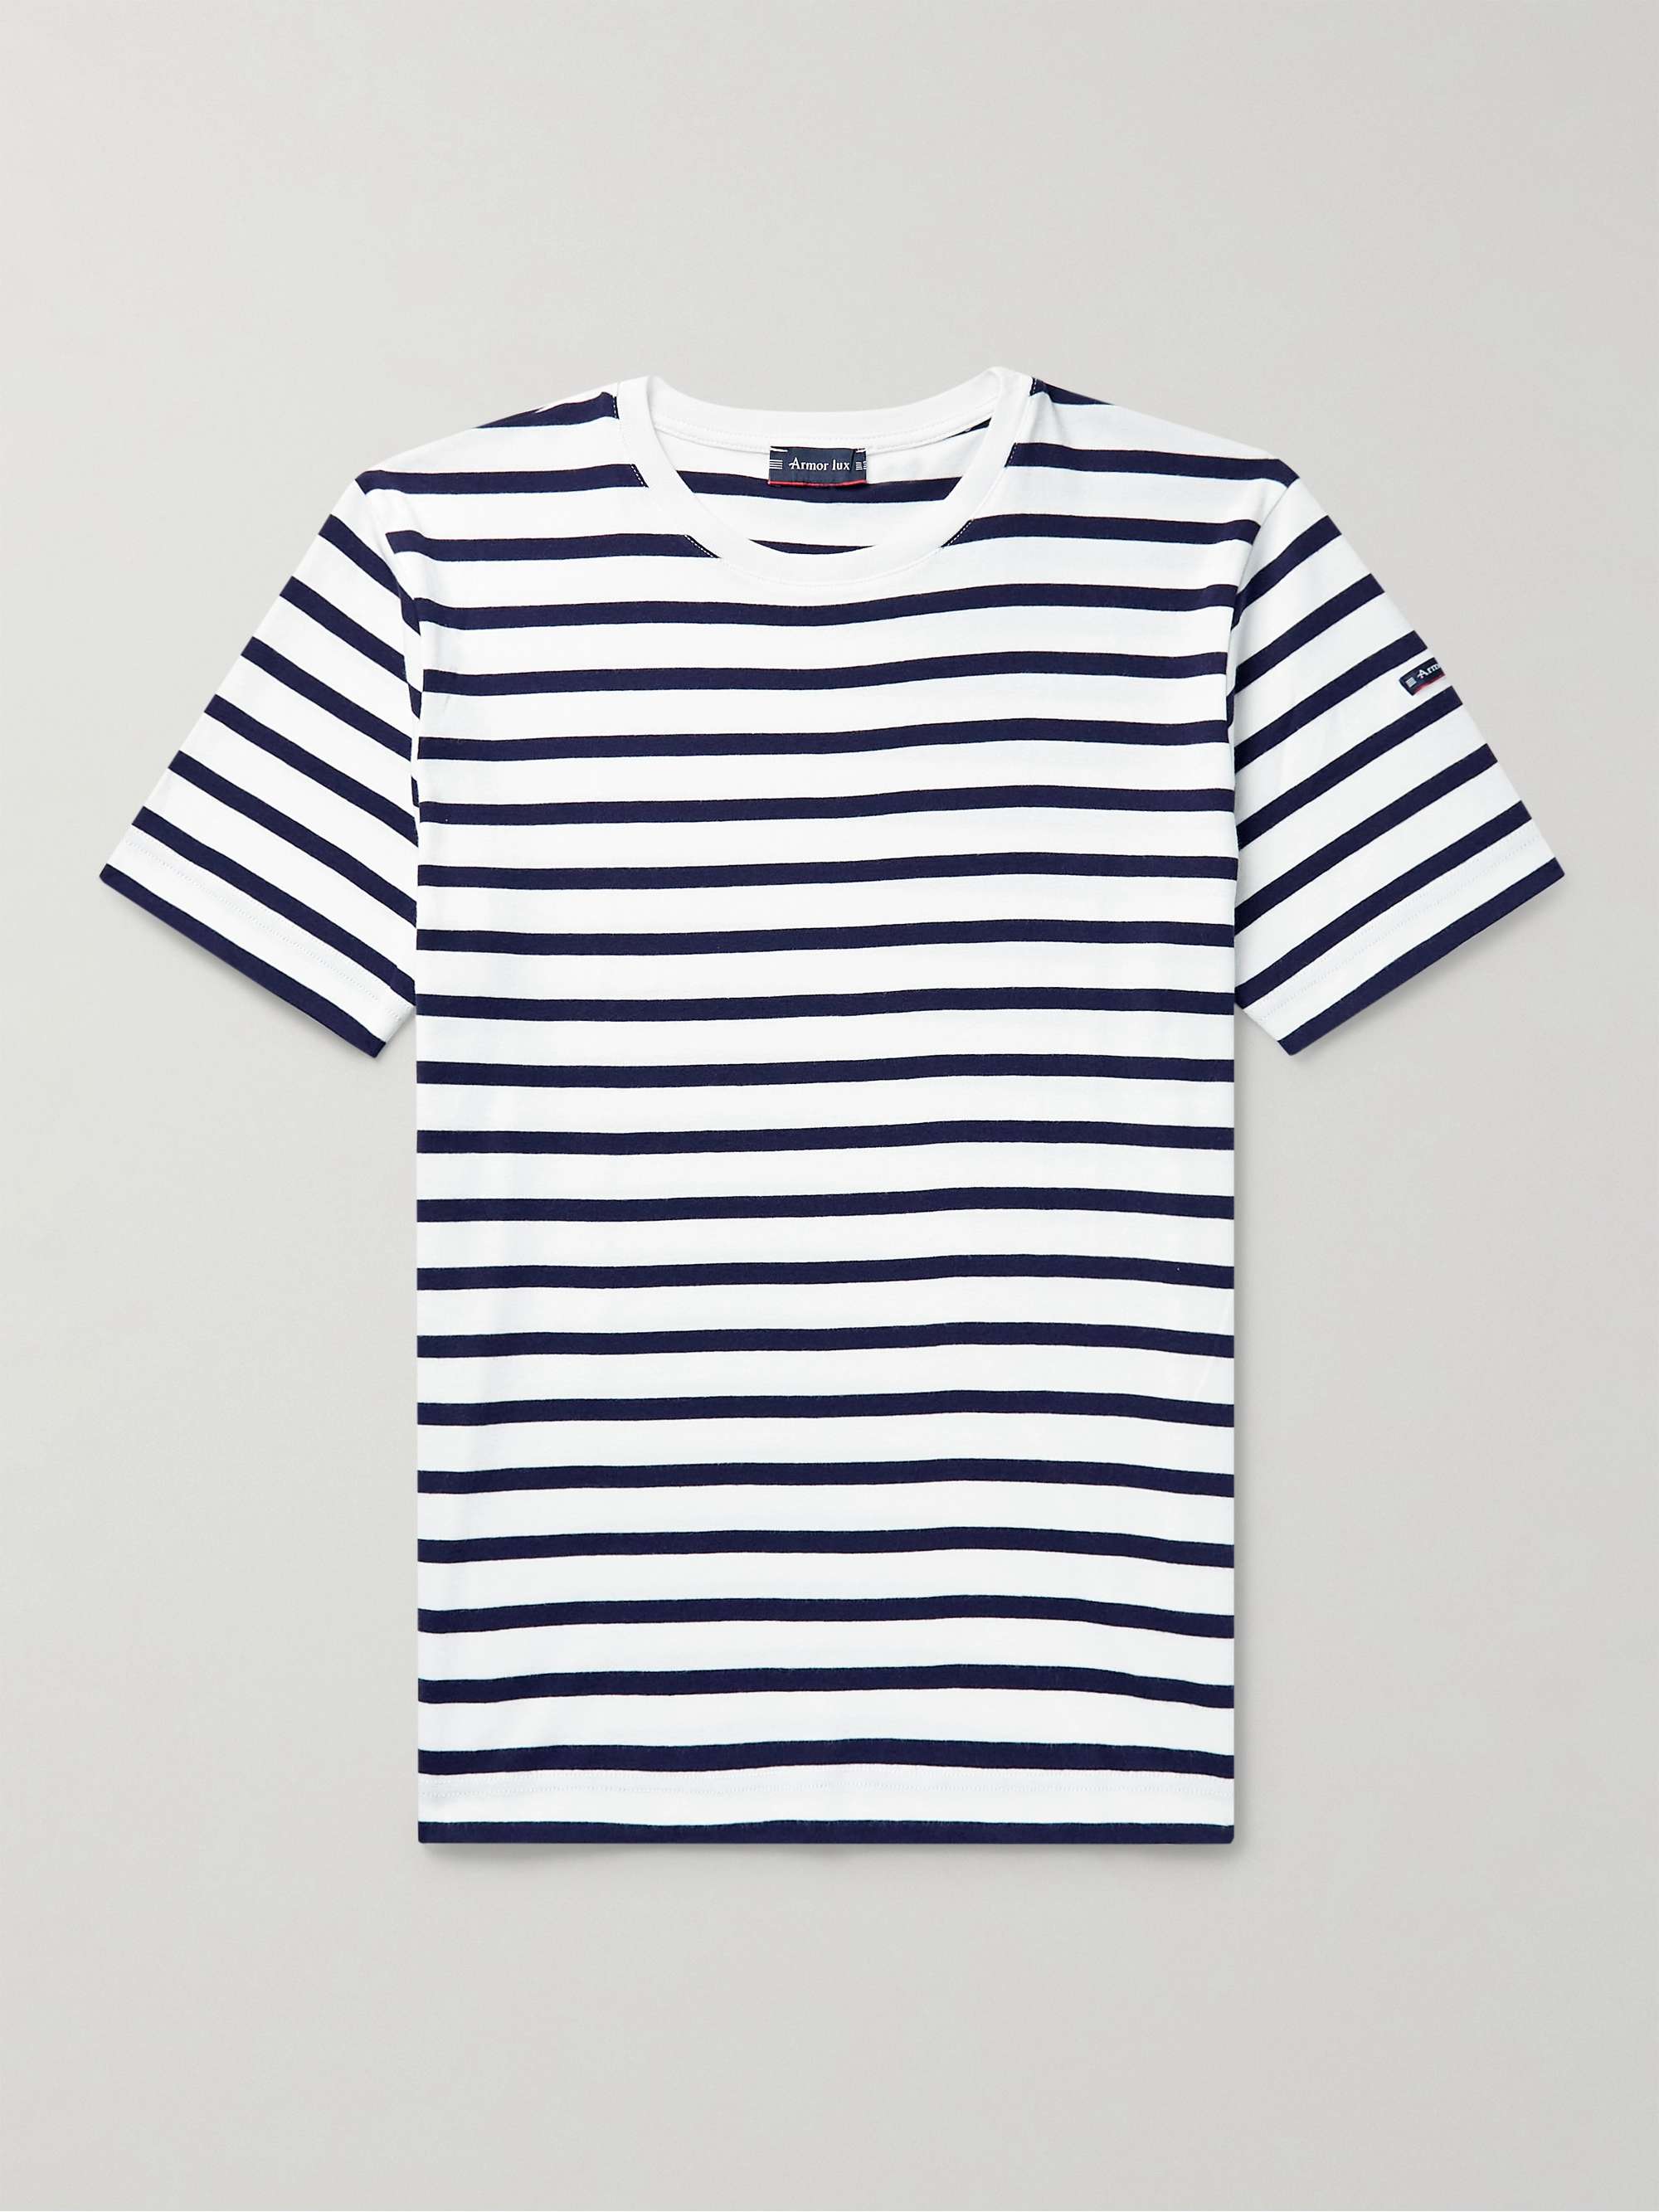 ARMOR-LUX Slim-Fit Striped Cotton-Jersey T-Shirt | MR PORTER